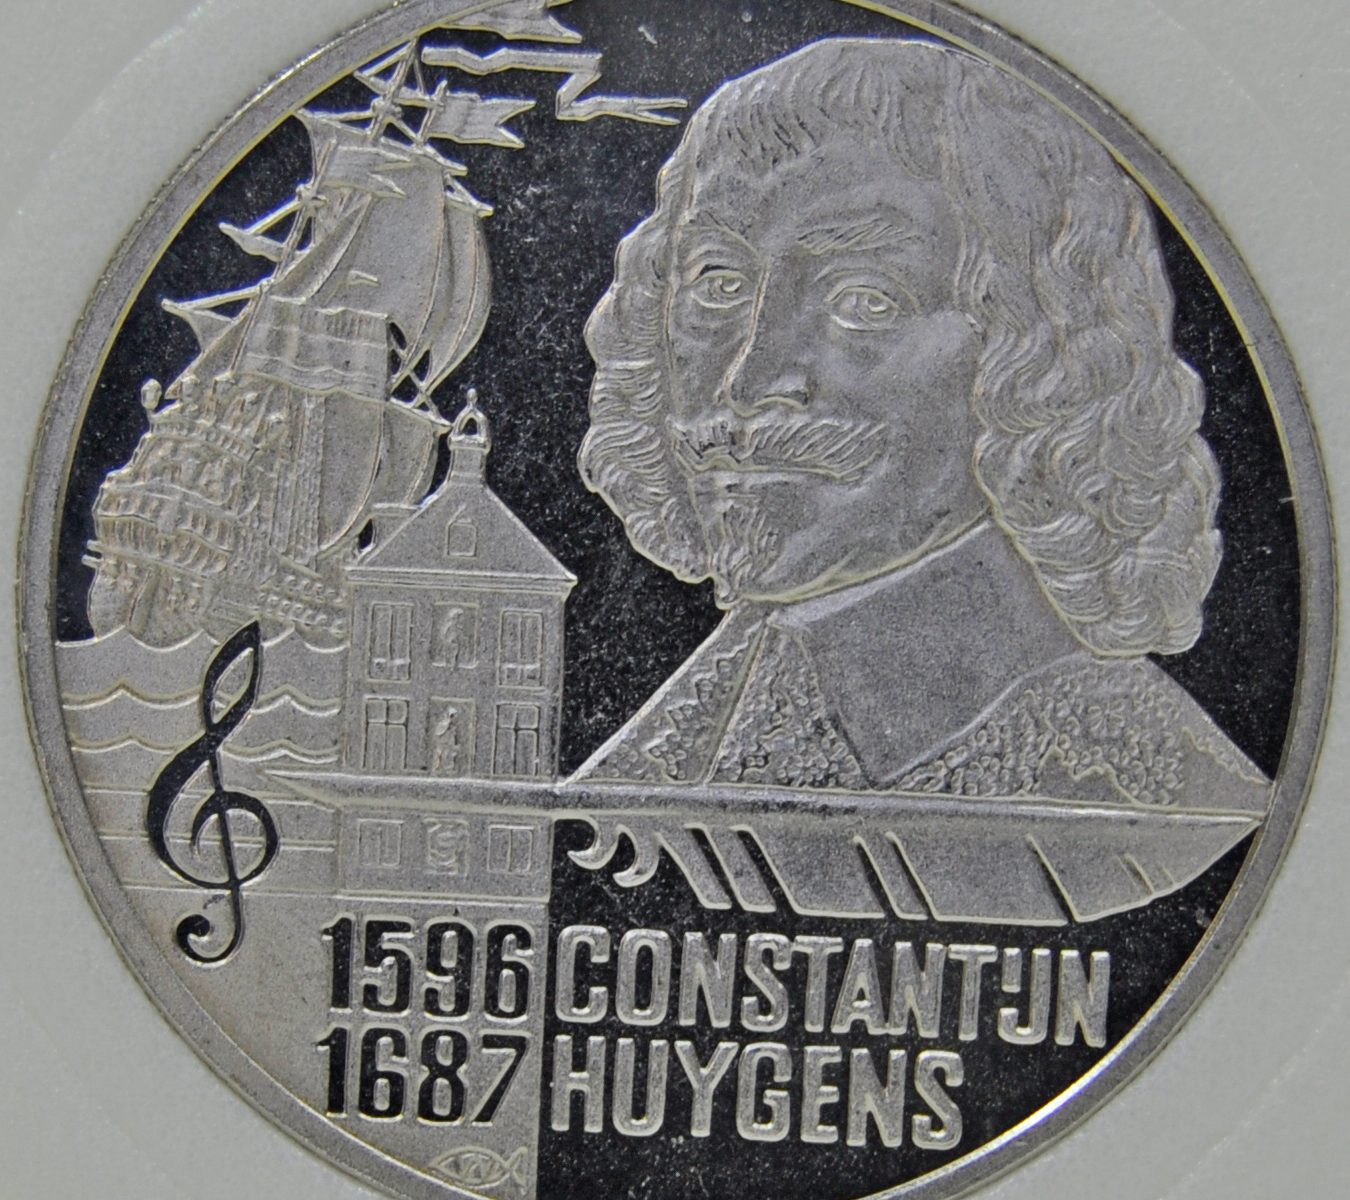 1996 Netherlands 5 EURO UNC 400th Anniversary Constantijn Huygens coin